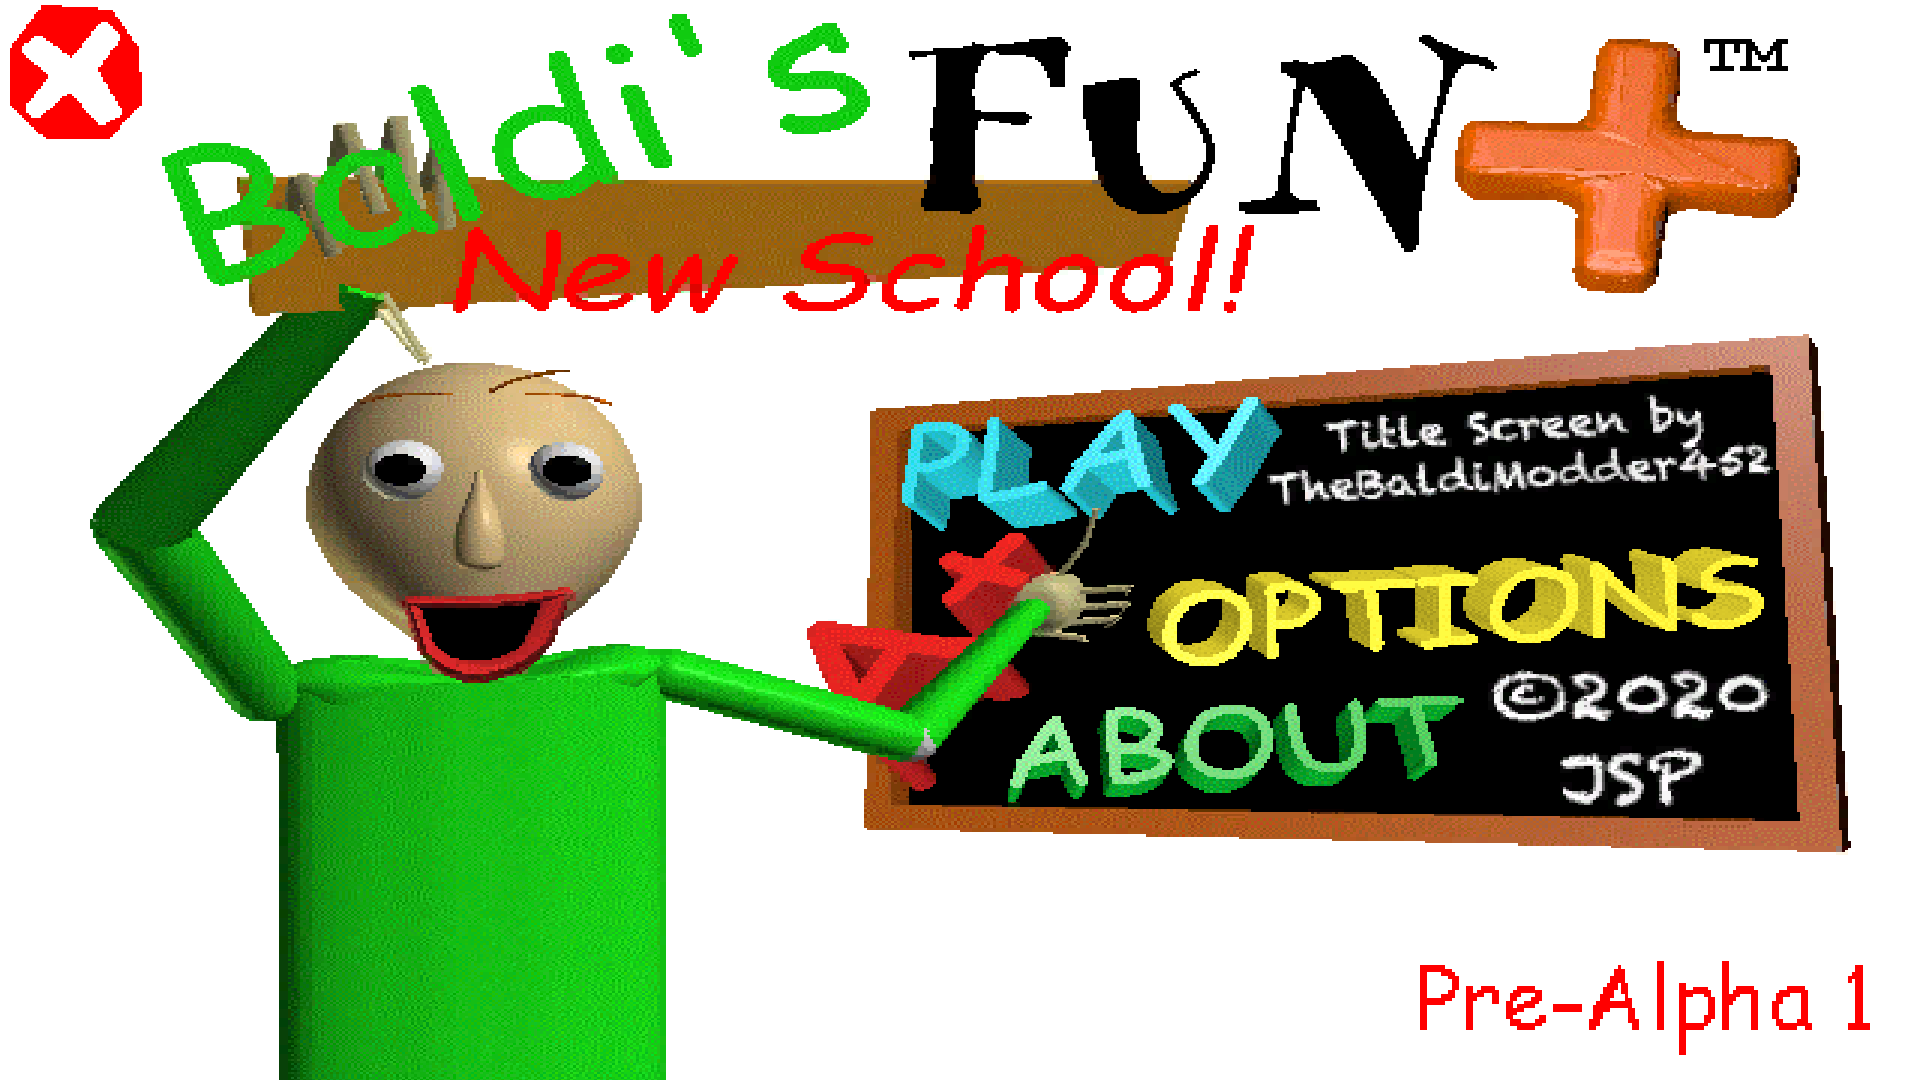 Baldi new school plus. Baldi fun New School. Baldi fun New School Remastered 1.4. Baldi Basics Plus School. Baldi's fun New School Remastered 1.4.3.1.